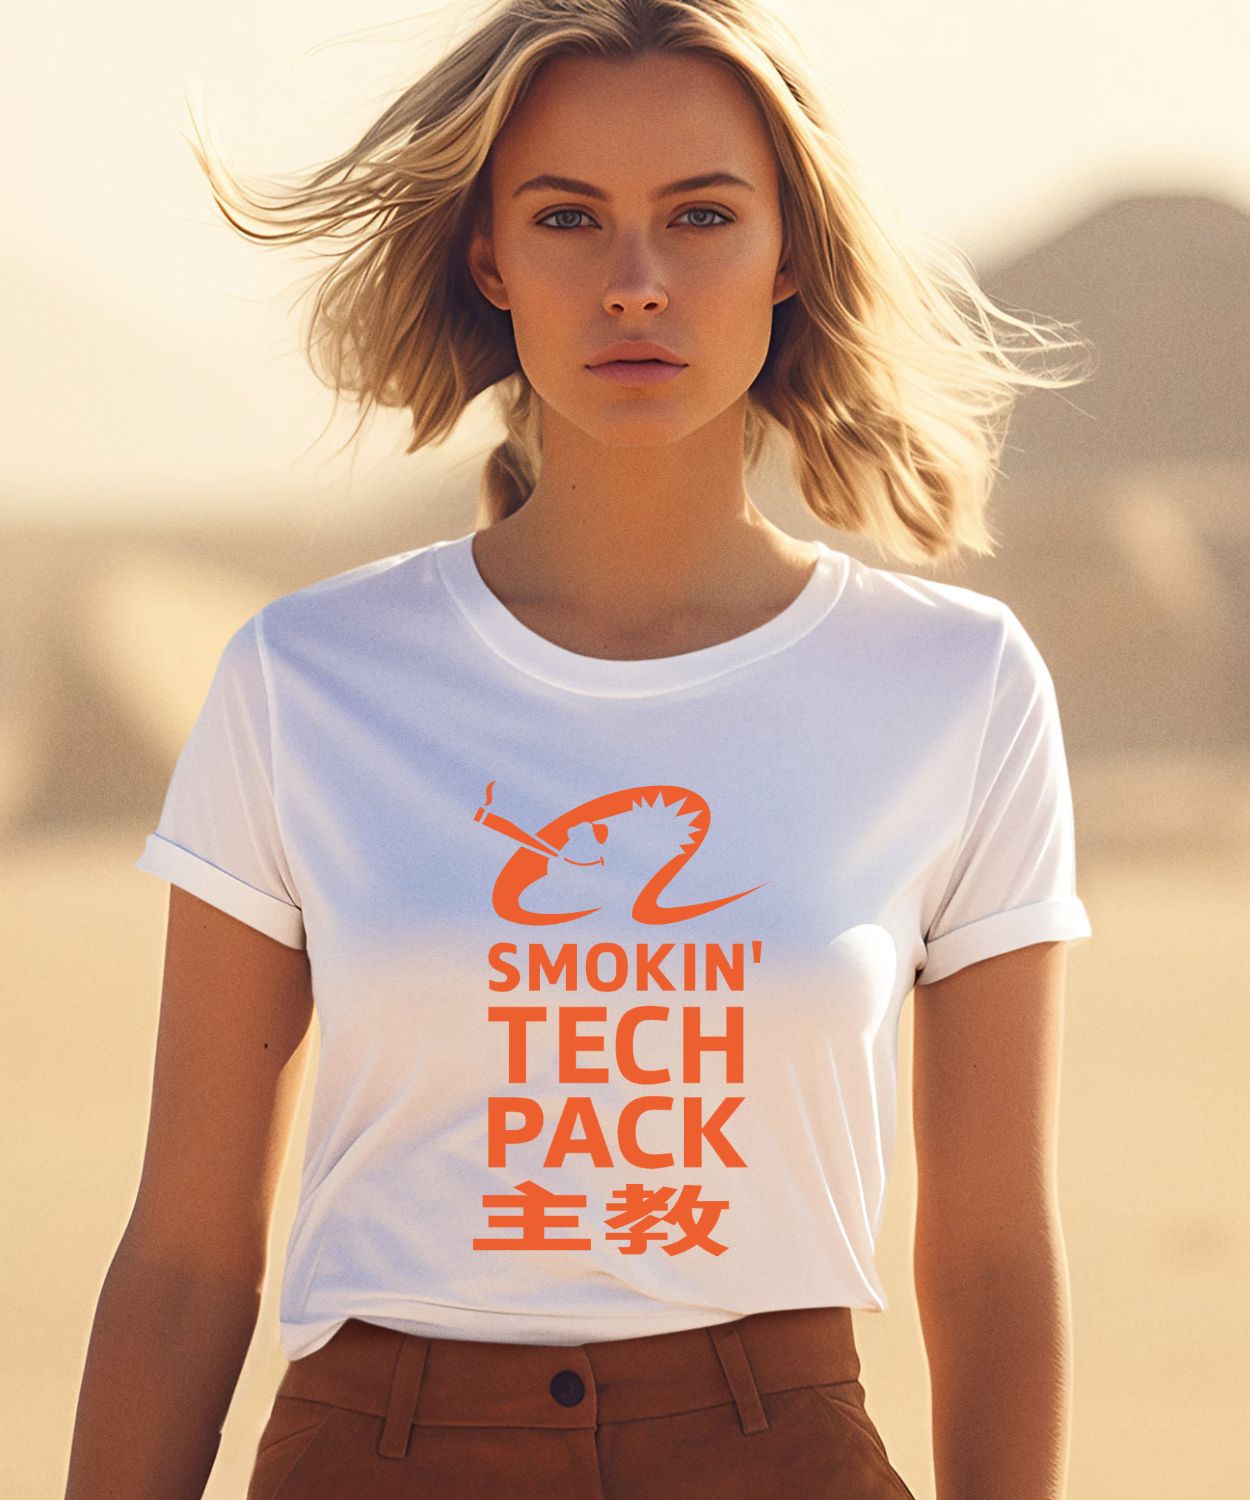 Bishhhop Smokin Tech Packs Shirt